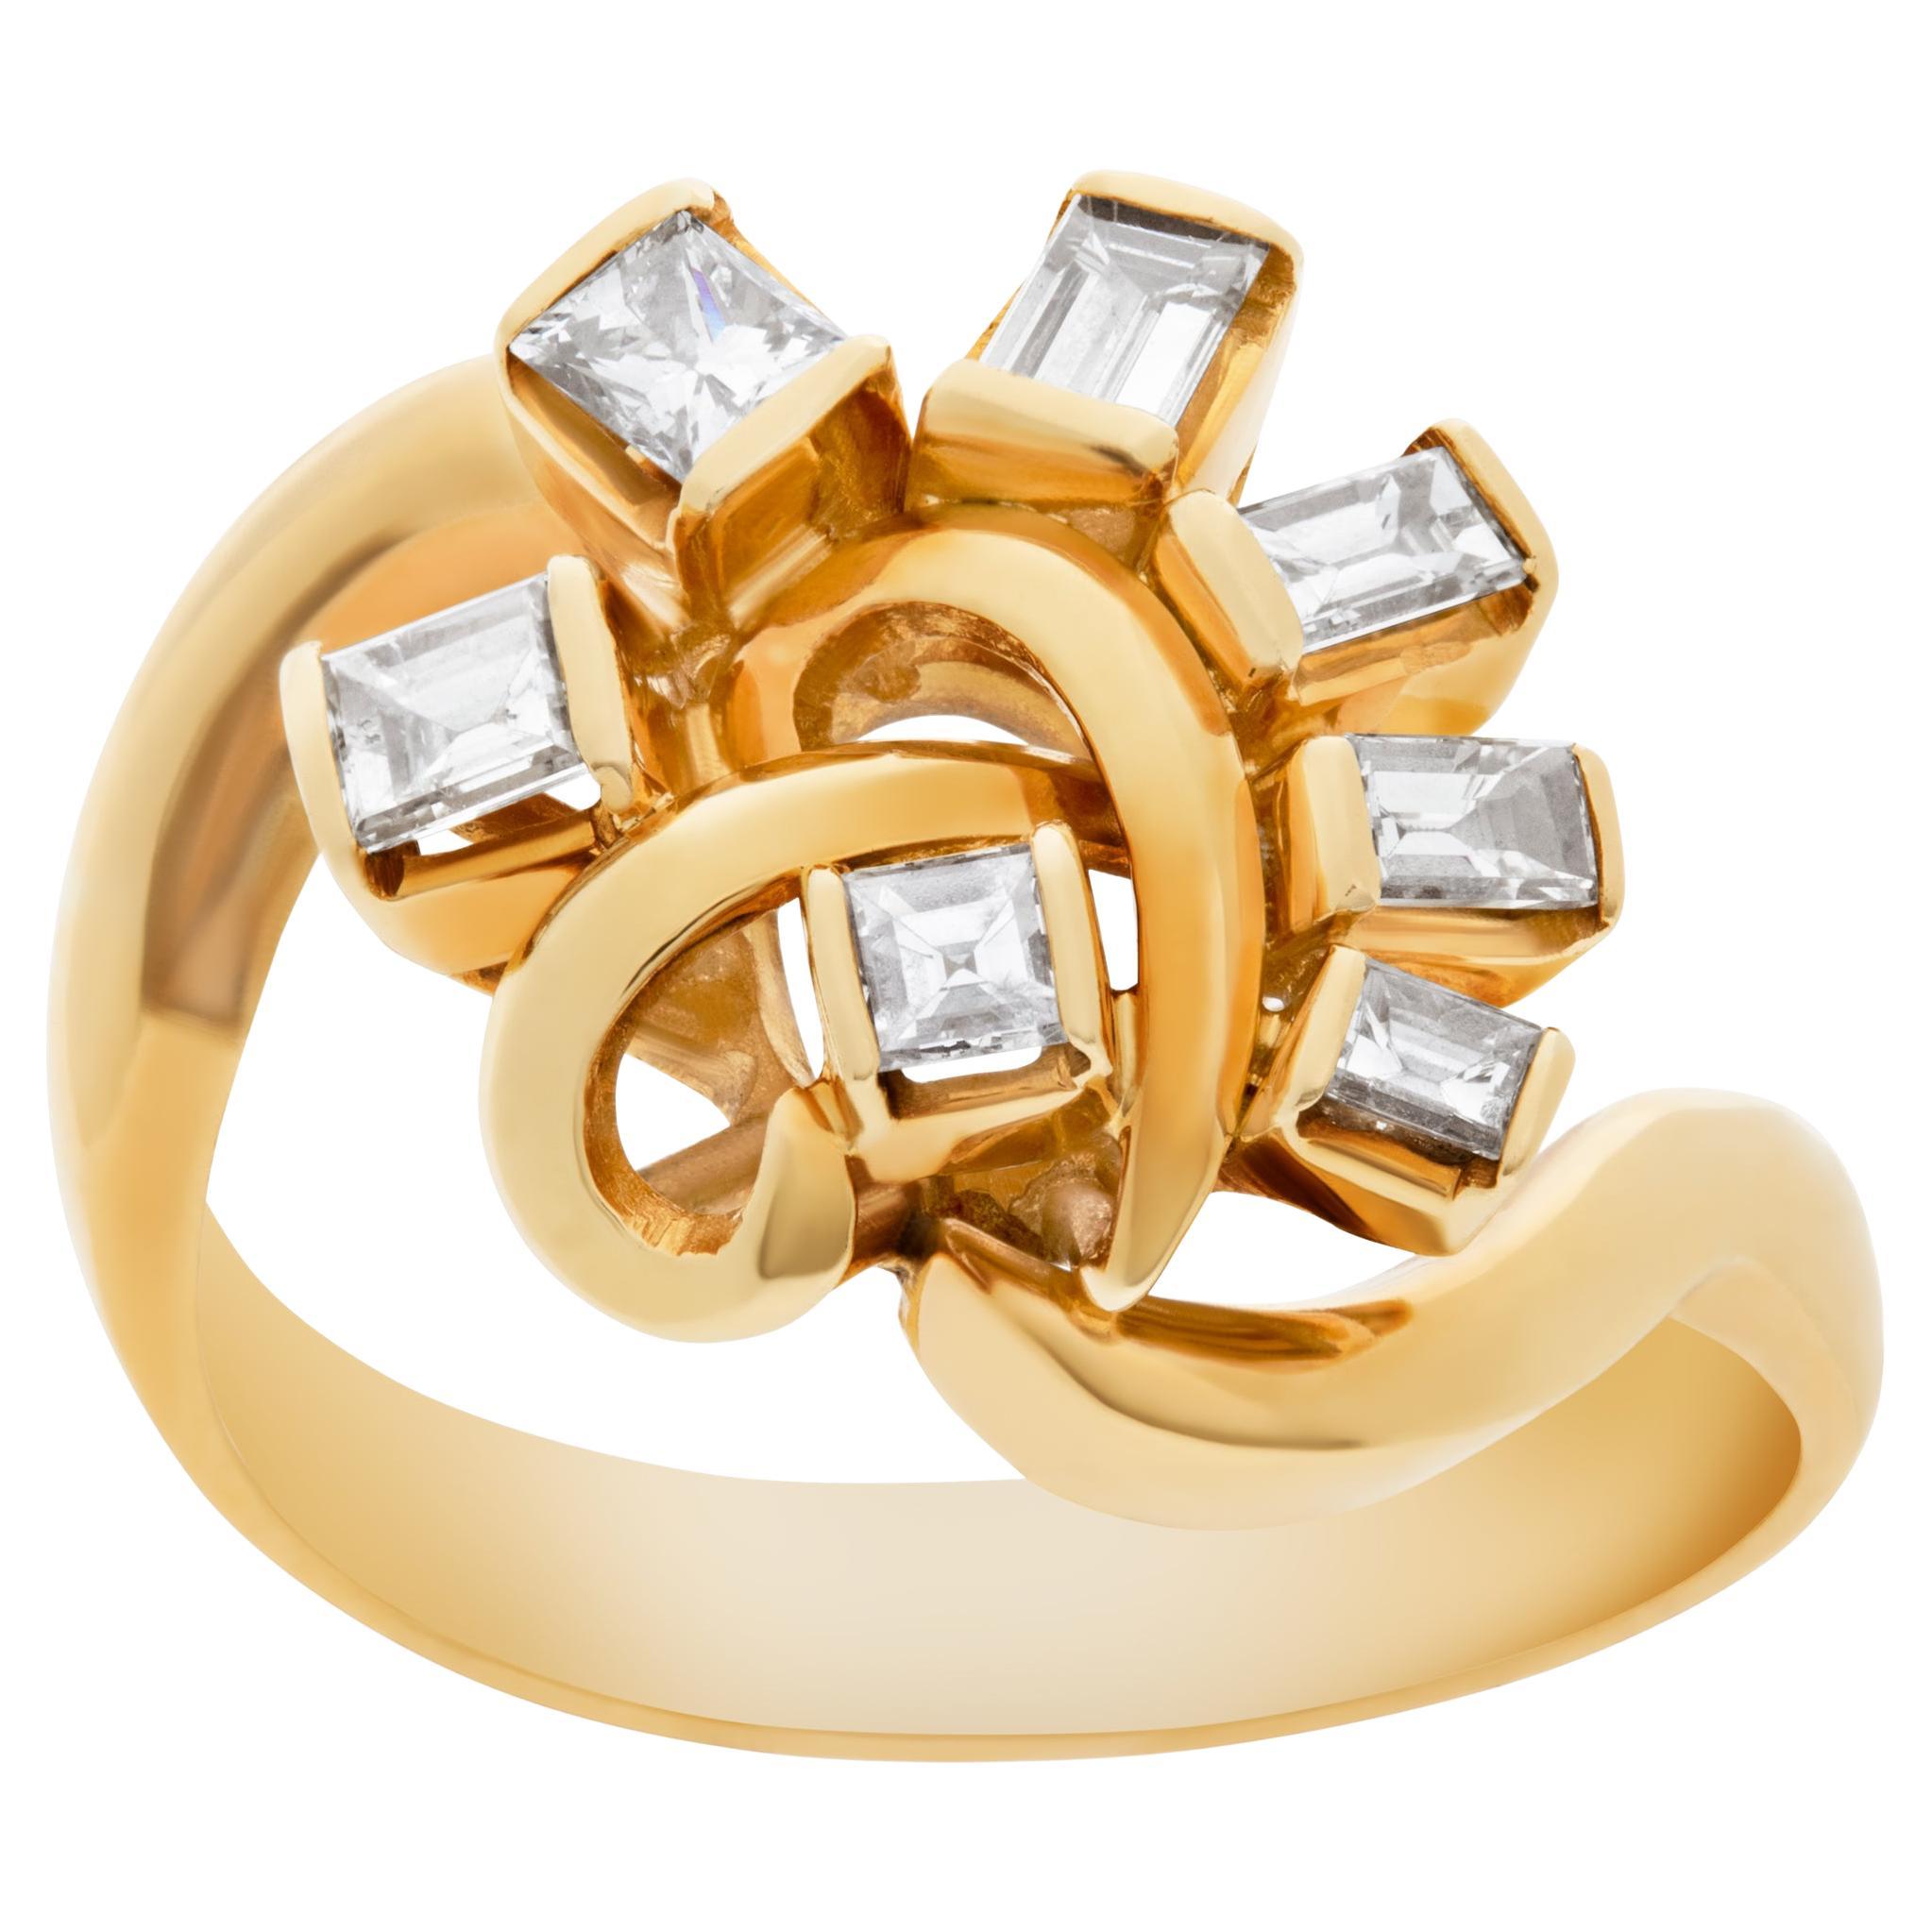 Swirl ring with diamonds set in 18k yellow gold